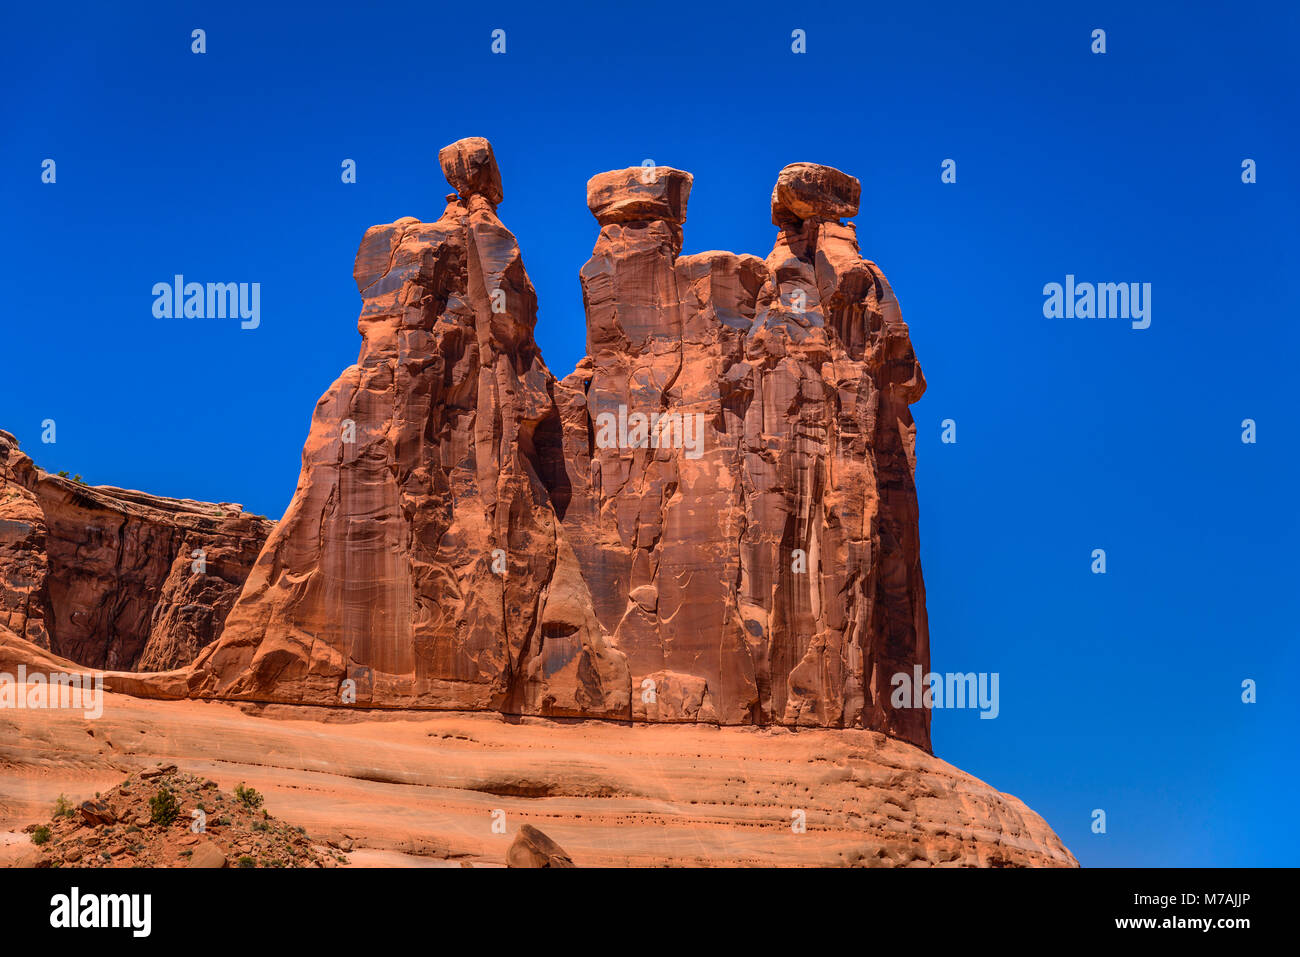 Die USA, Utah, Grand County, Moab, Arches National Park, Courthouse von Turm, drei Klatschbasen Stockfoto